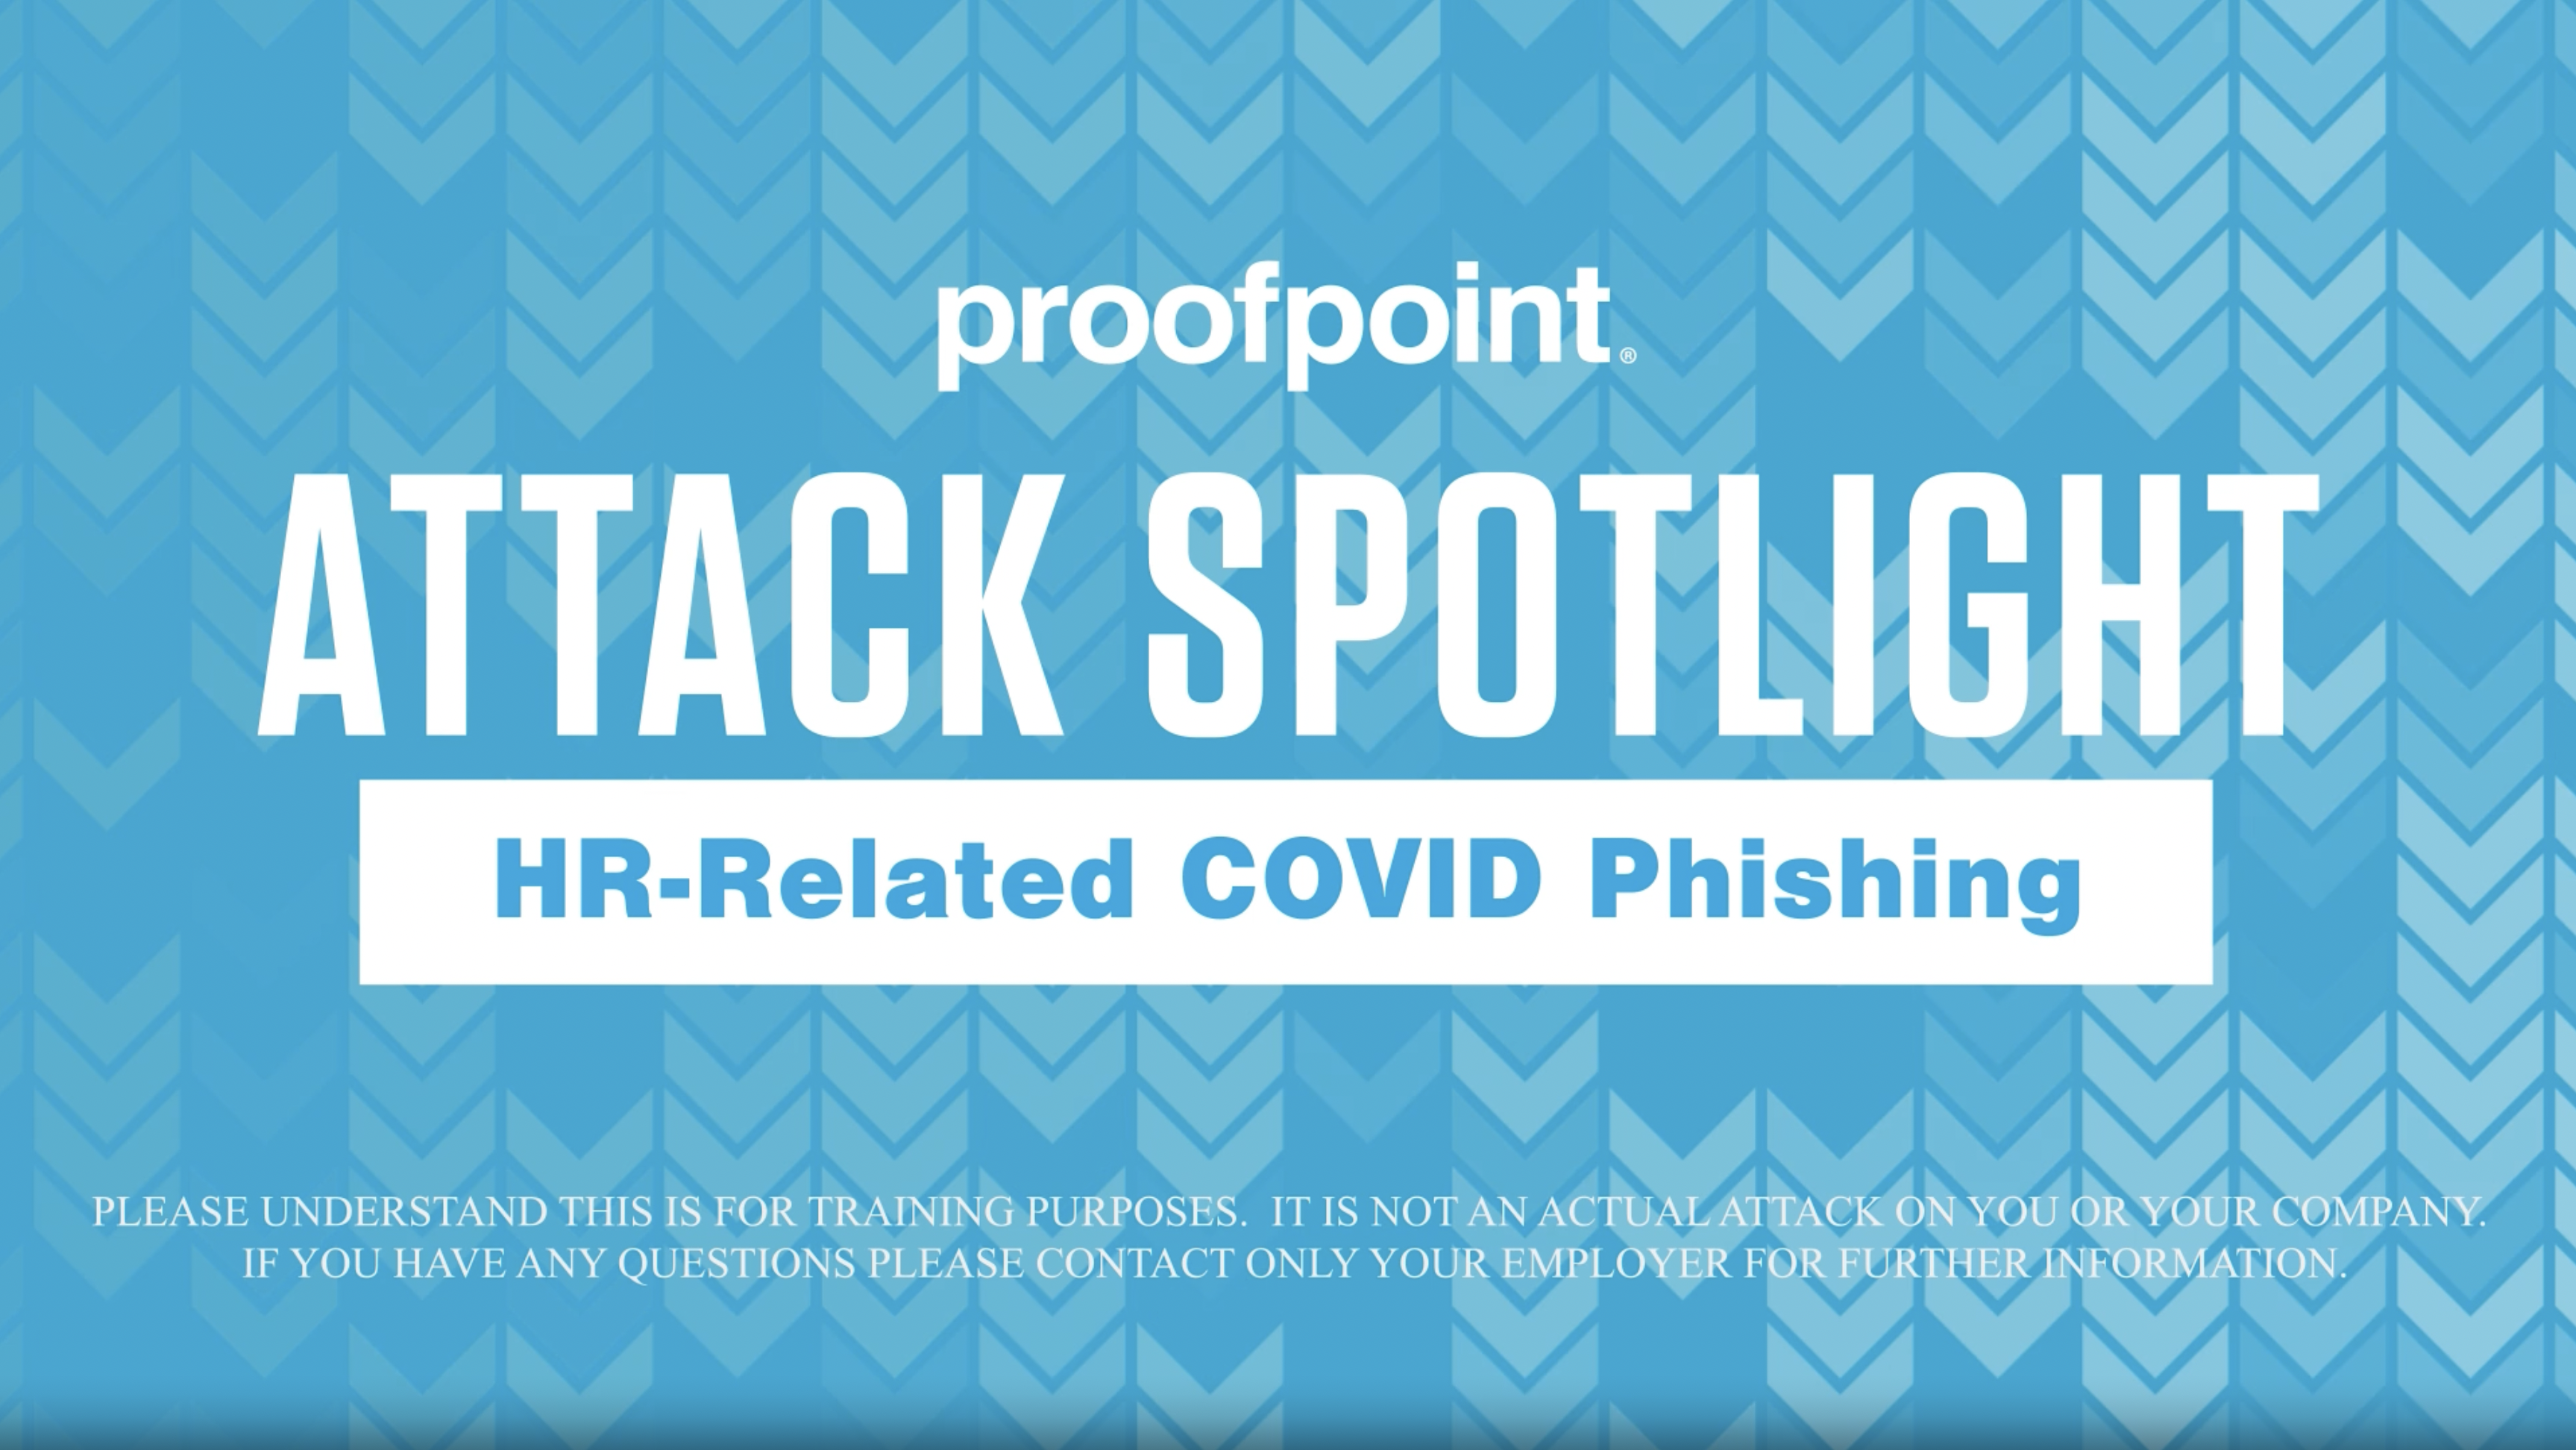 Proofpoint - Attack Spotlight HR Phishing Video Thumbnail